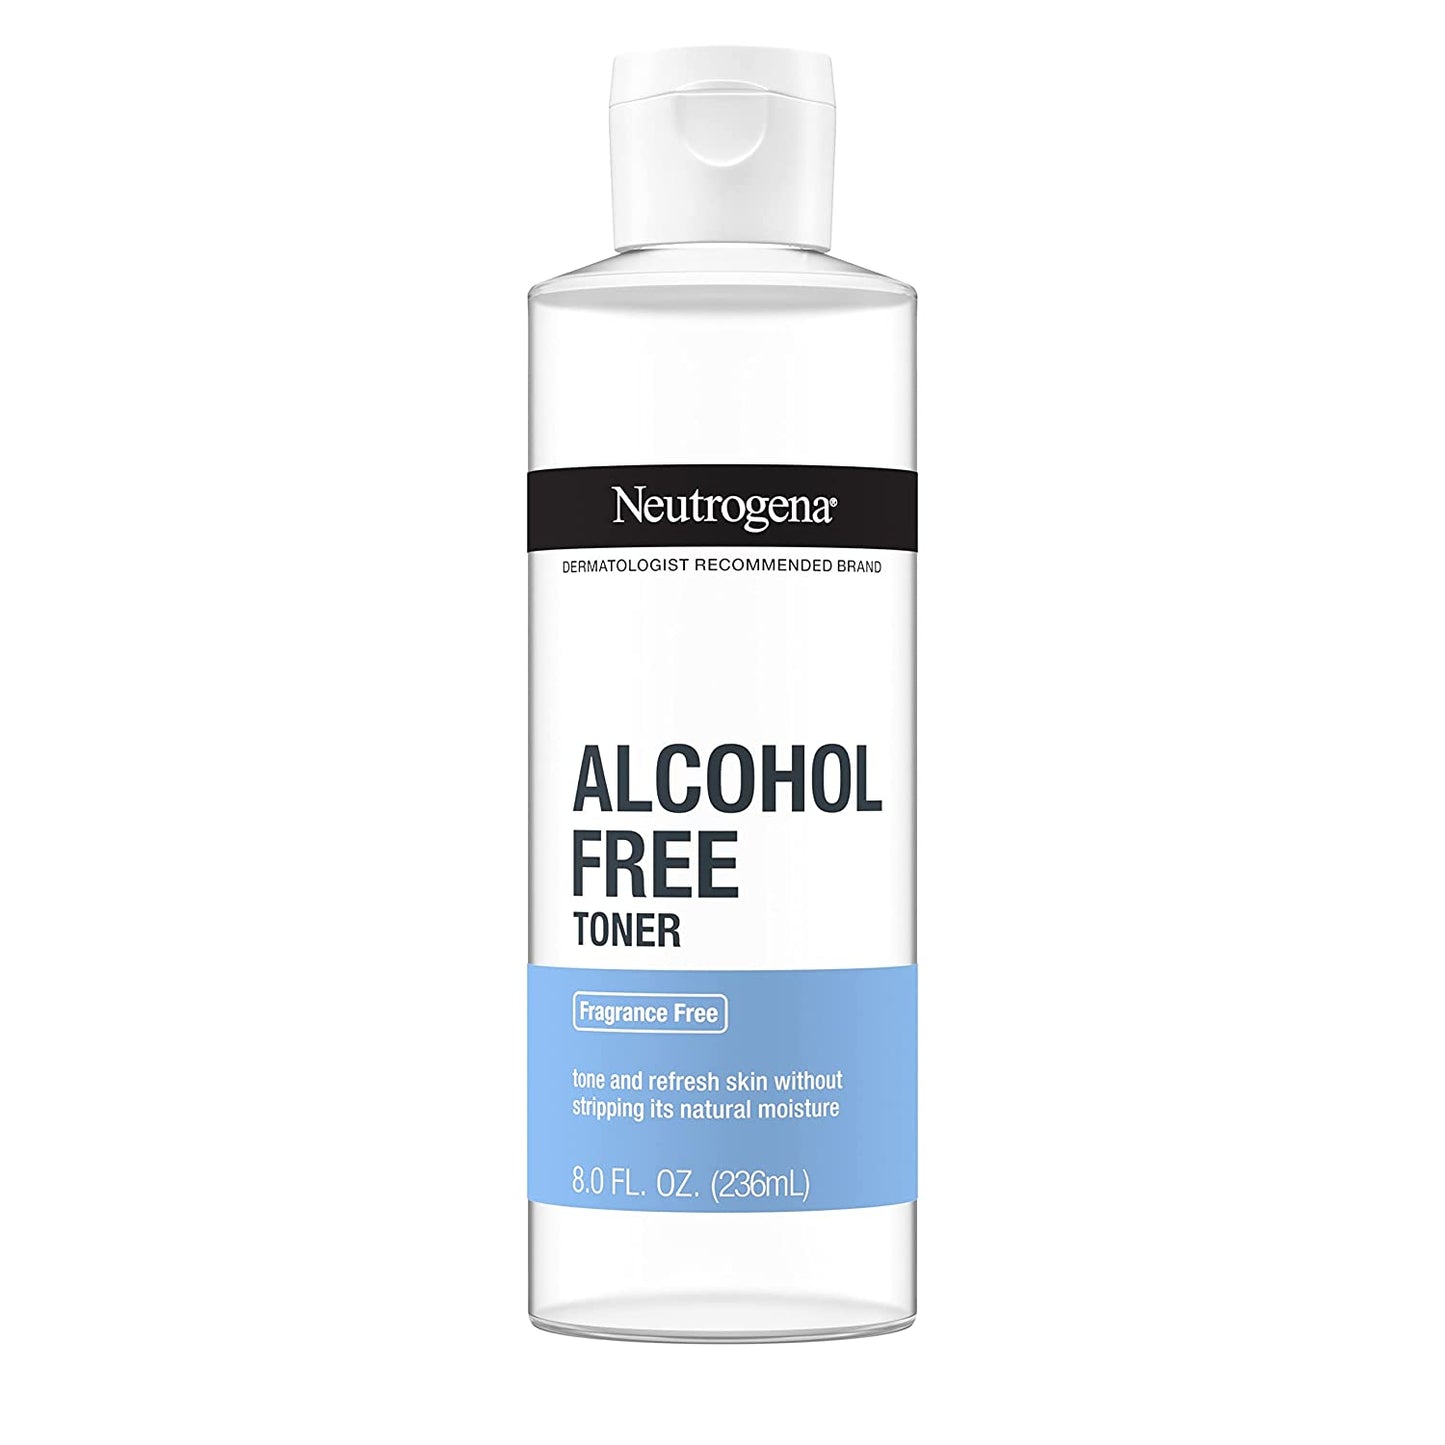 Neutrogena Alcohol Free Toner Fragrance Free Tone and Refresh Skin 8.0 fl oz/ 236ml